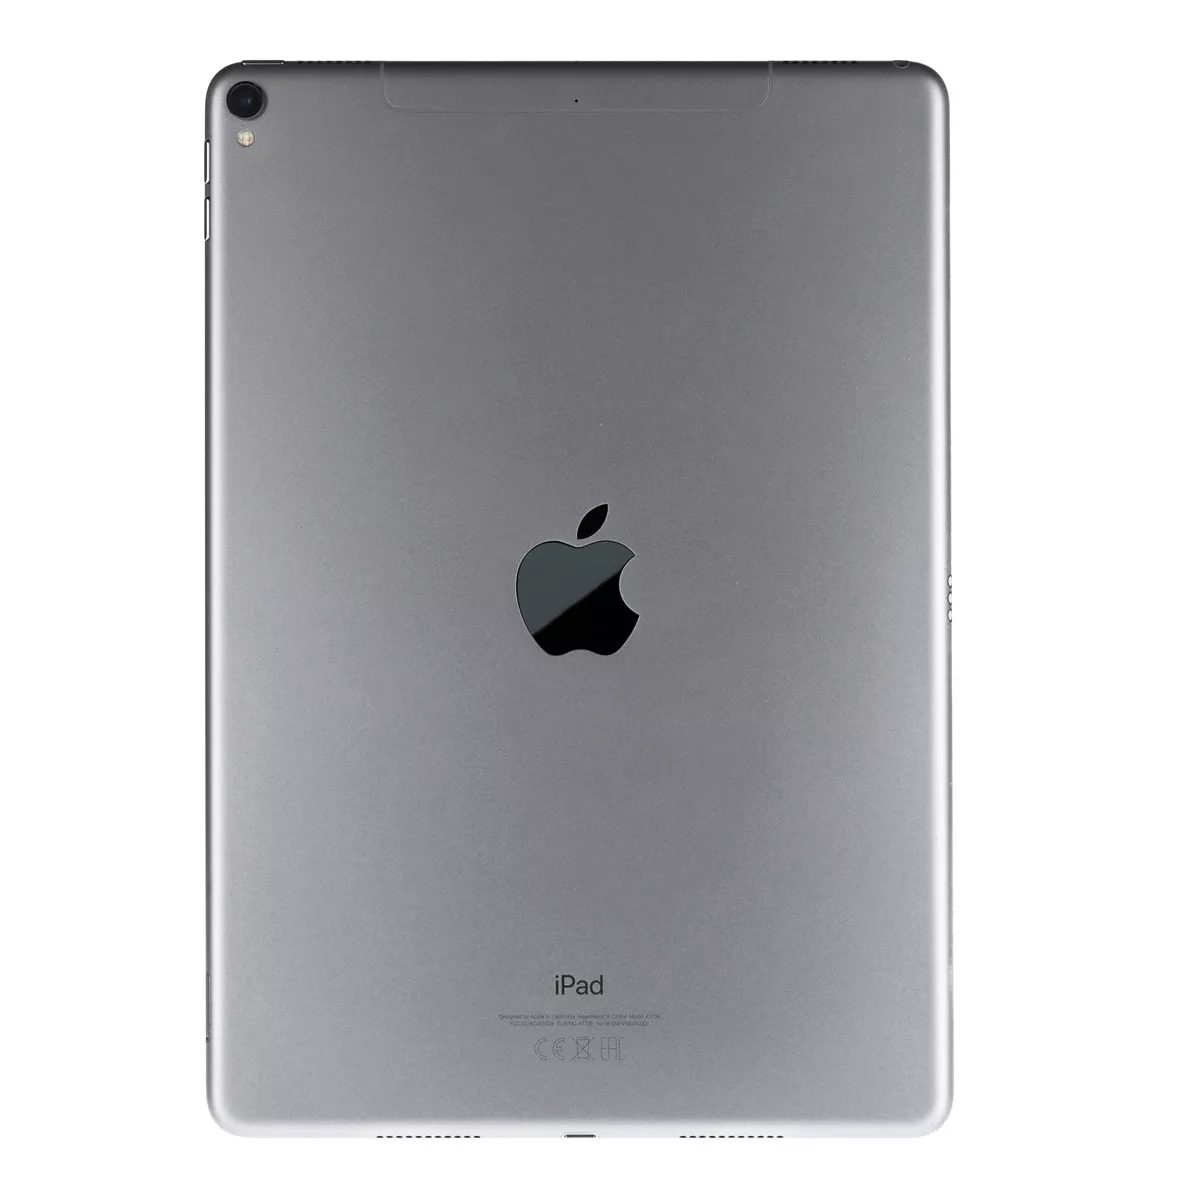 Apple iPad Pro 64 GB Wi-Fi Cell space-grey A1709 B